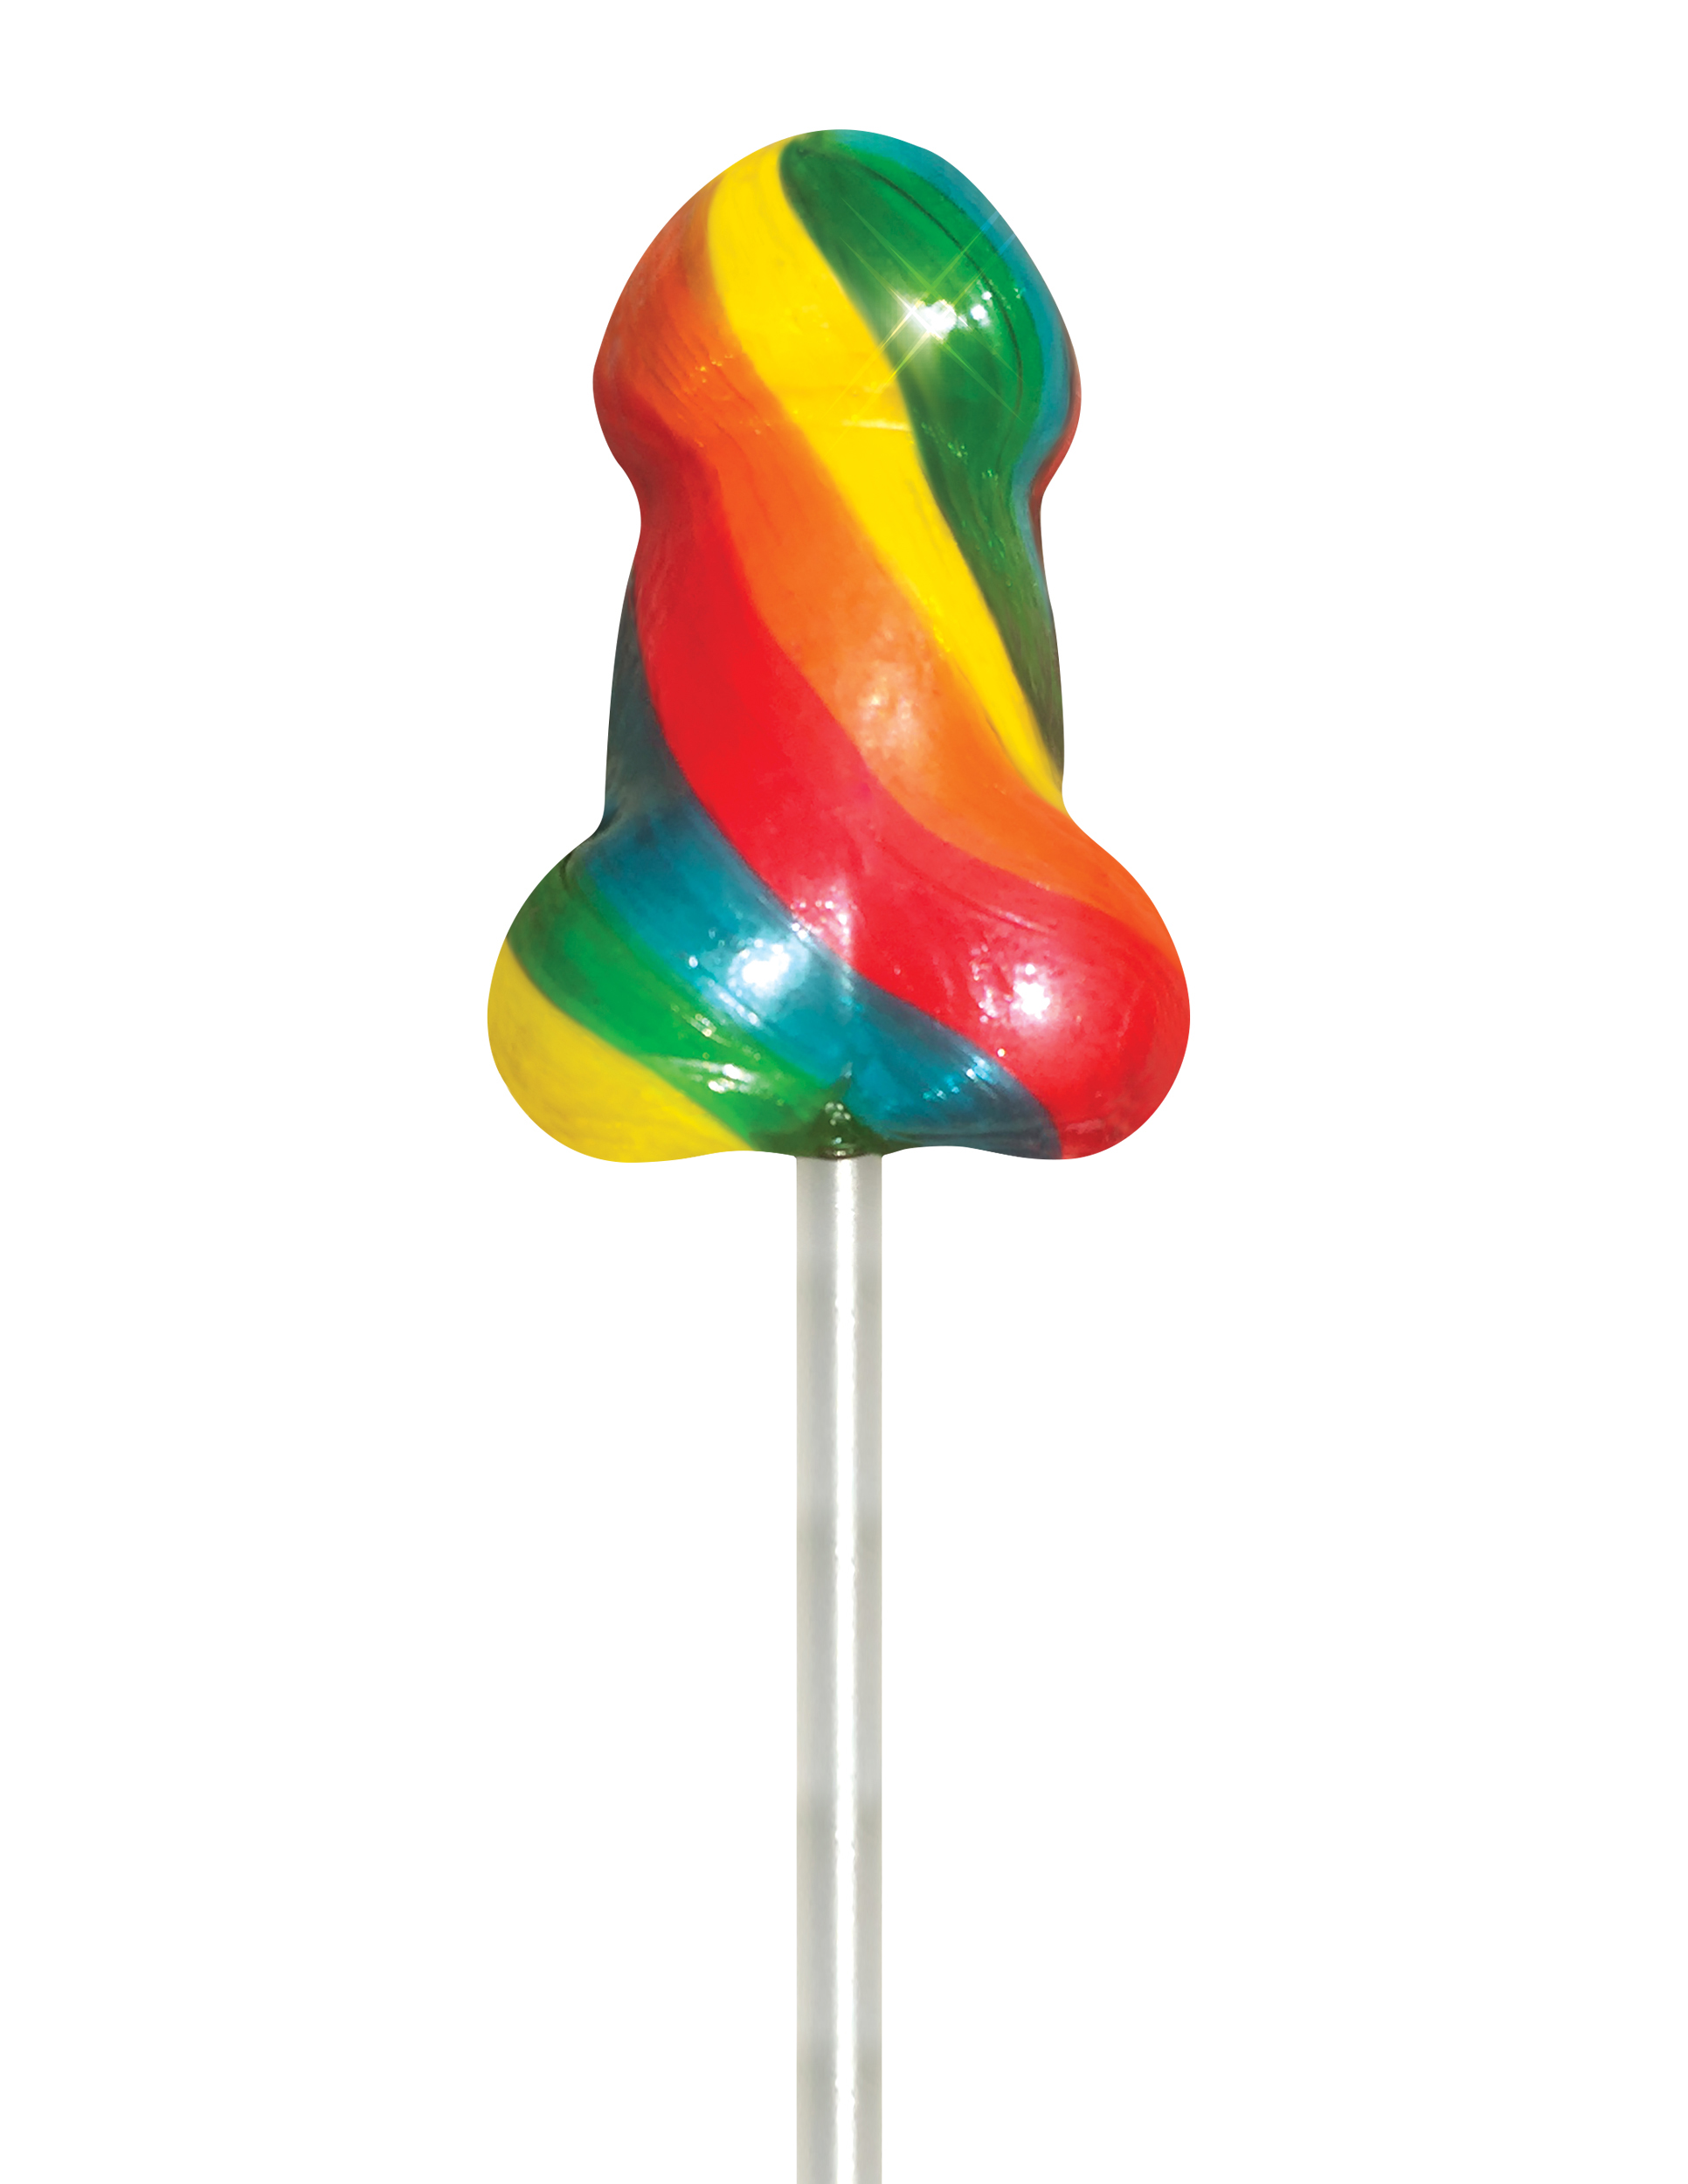 rainbow pecker pops  count 